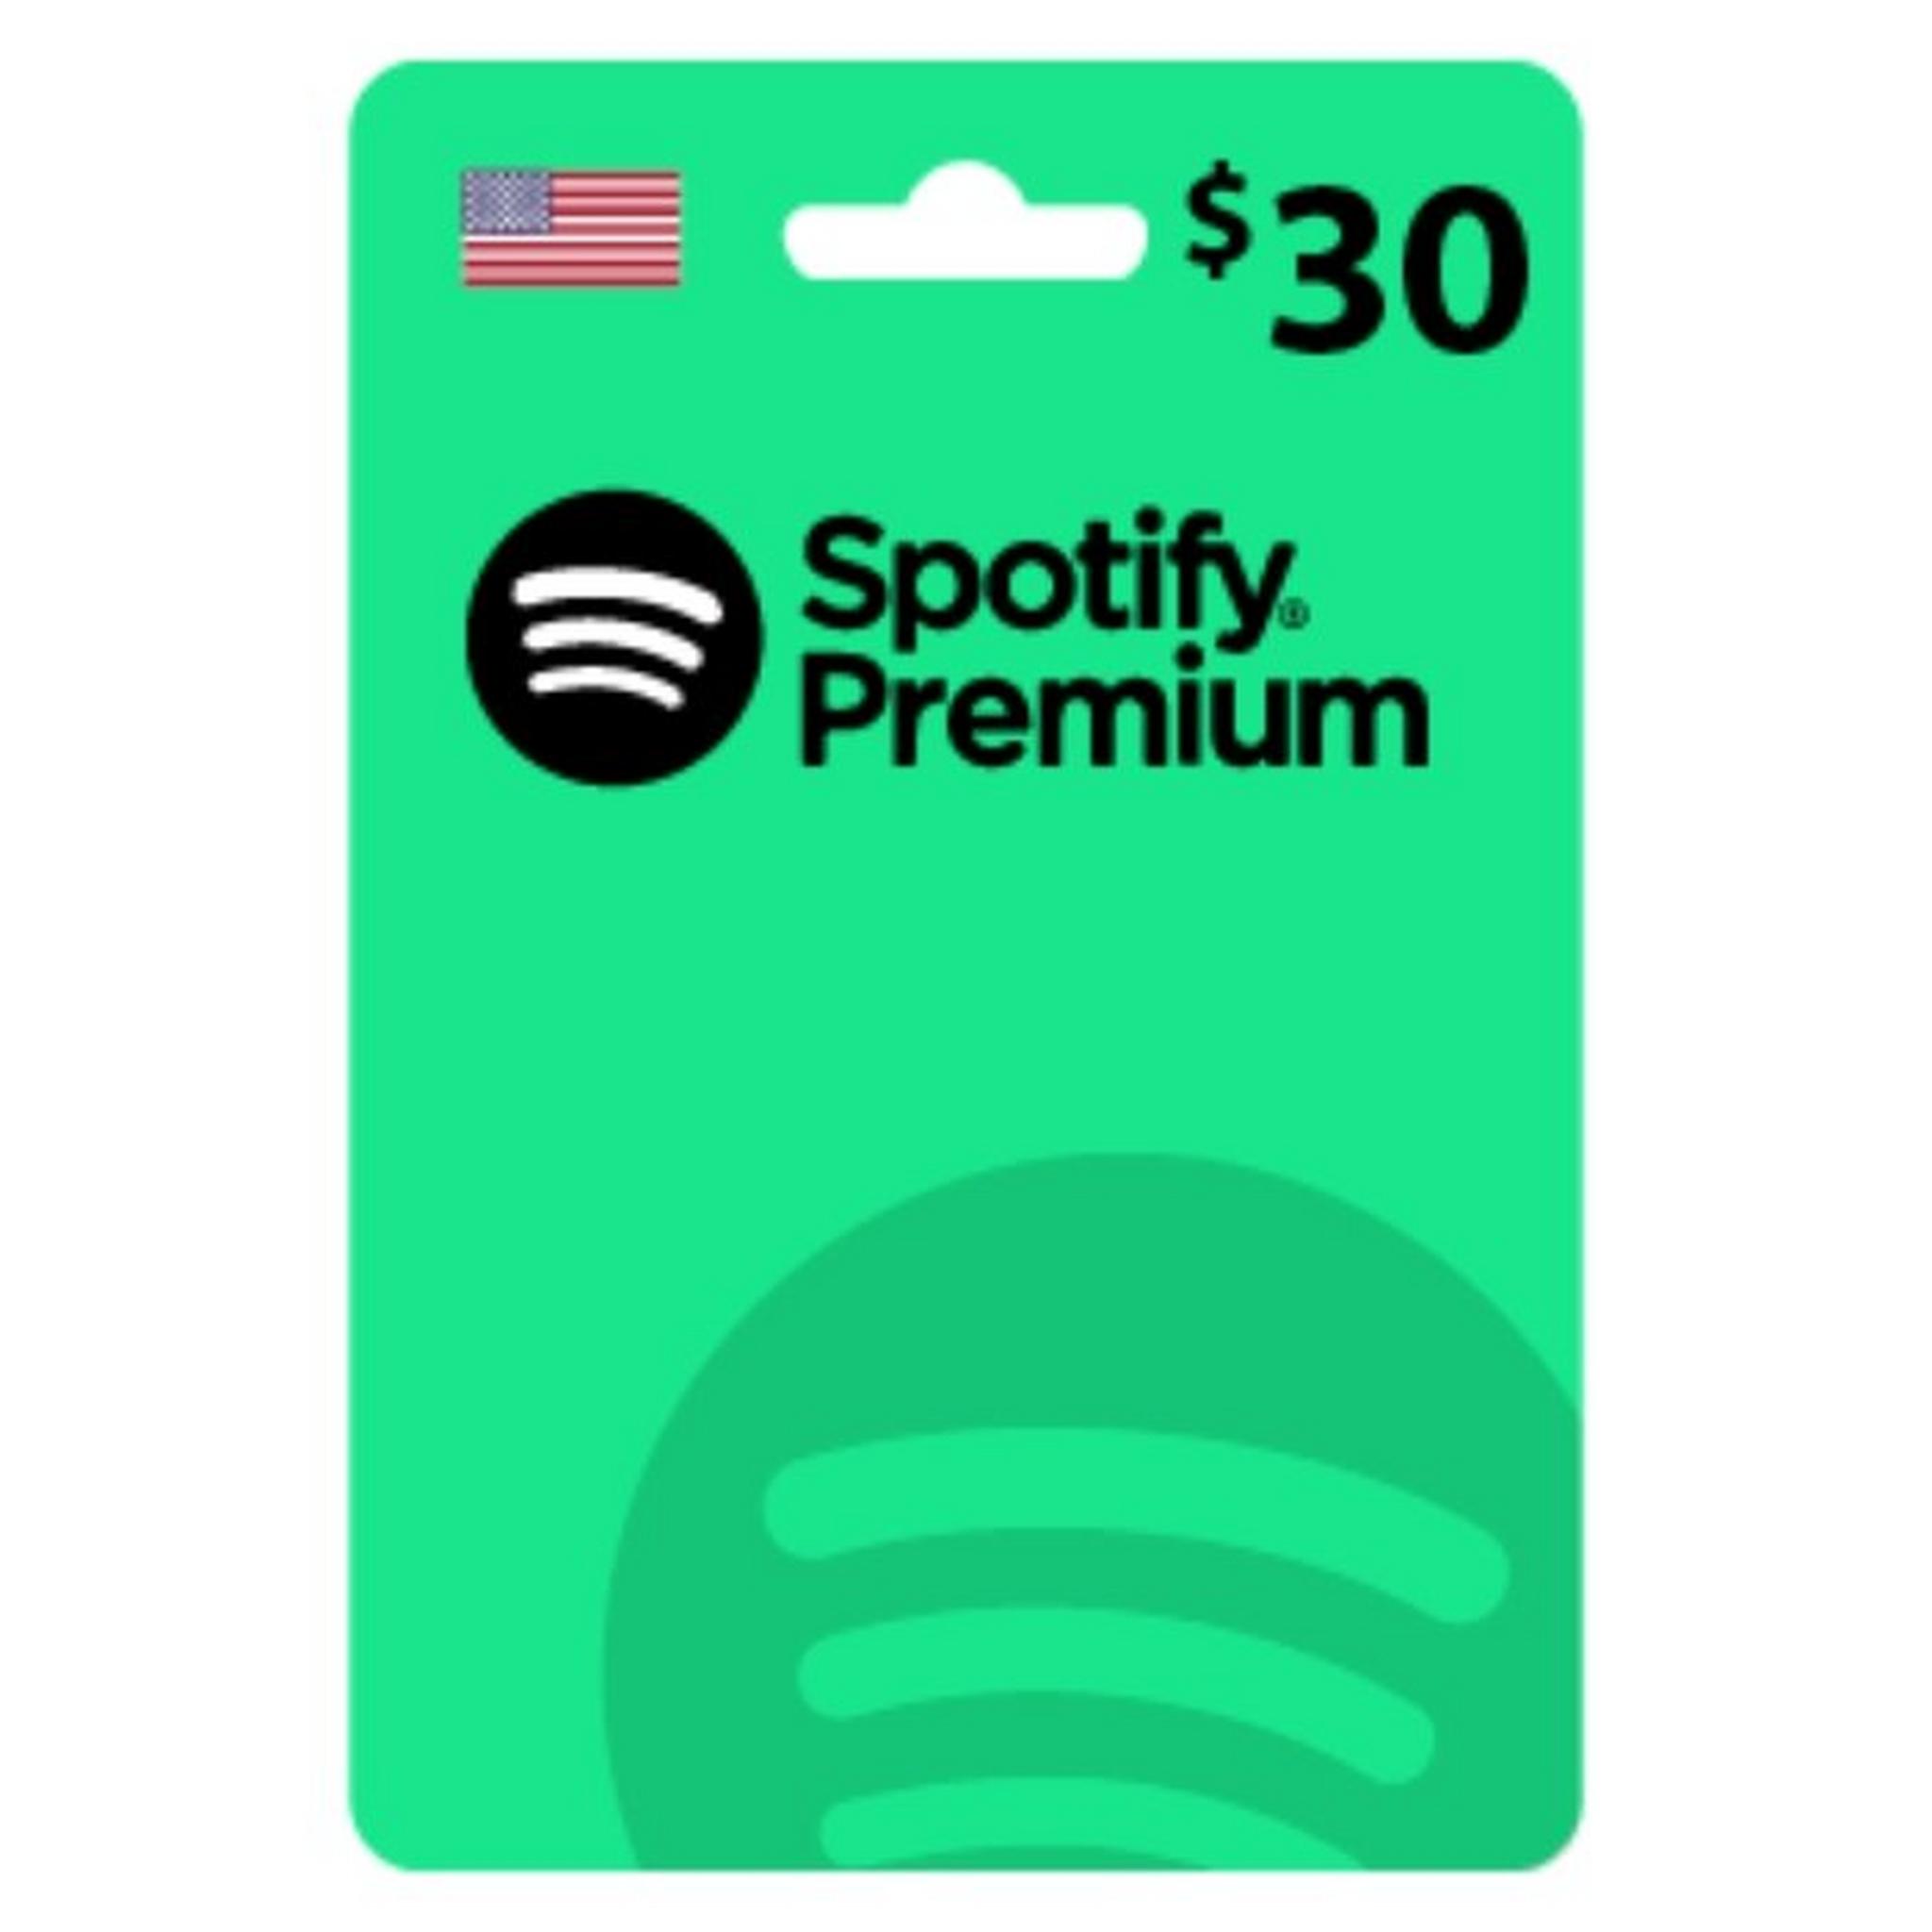 Spotify Premium Digital Card $30 (U.S. Account)